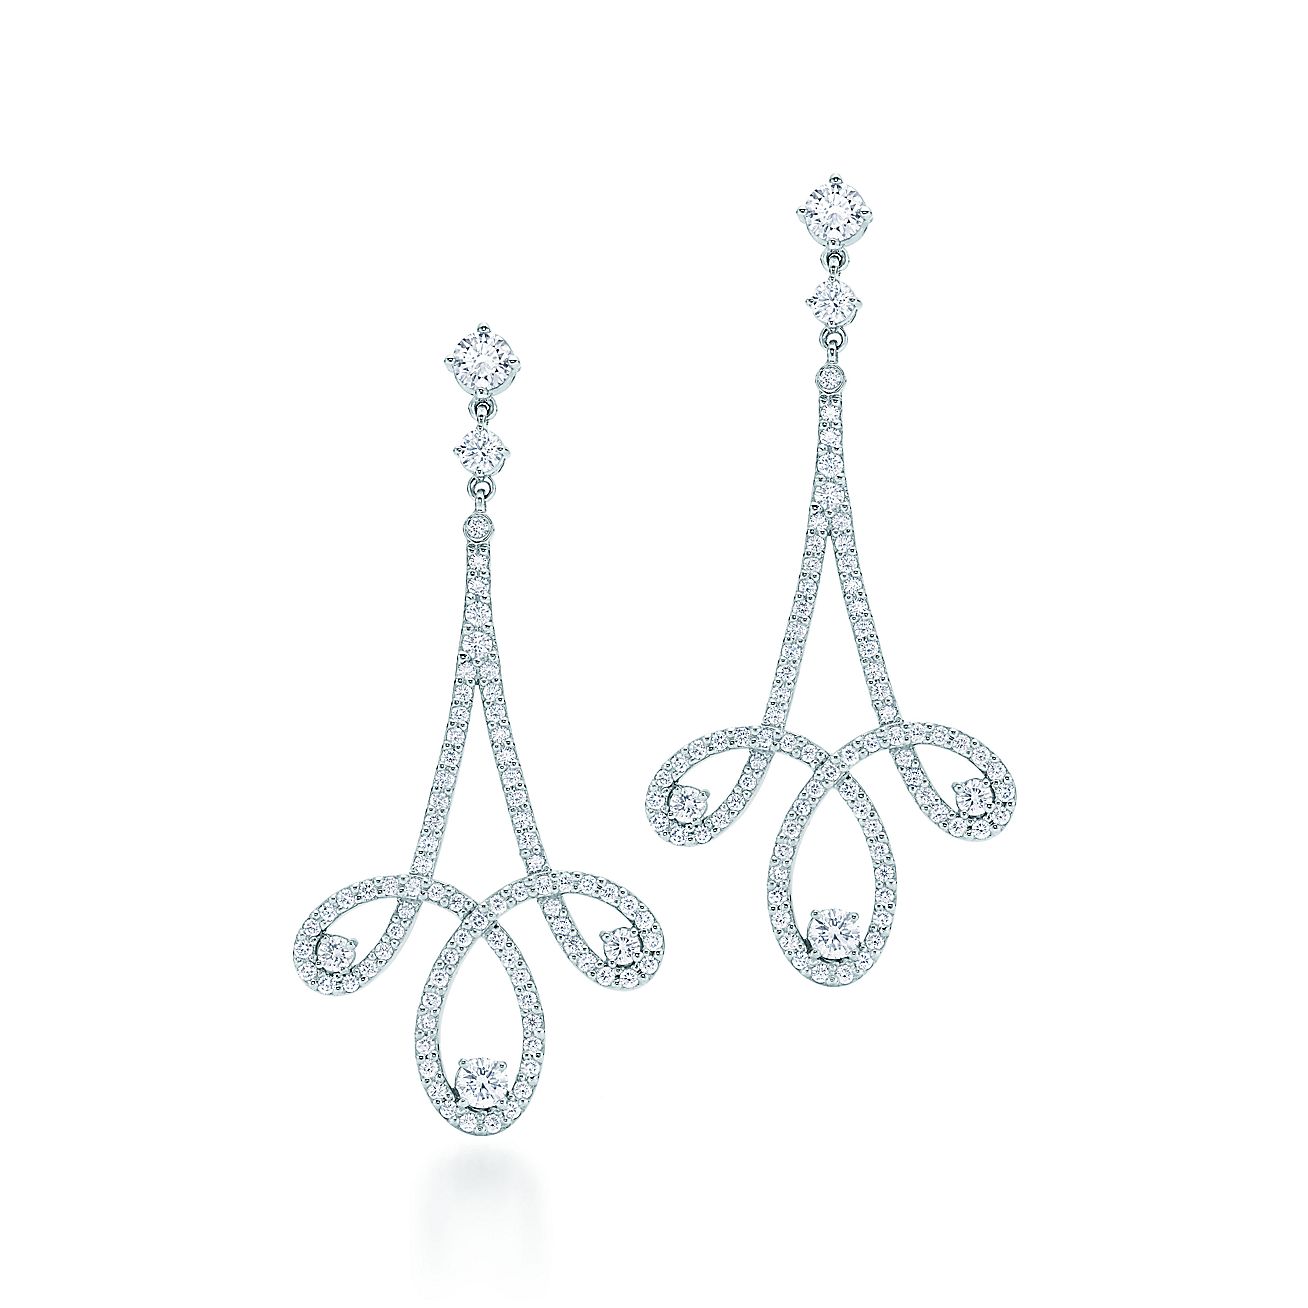 Tiffany Enchant® scroll earrings in platinum with diamonds. | Tiffany & Co.